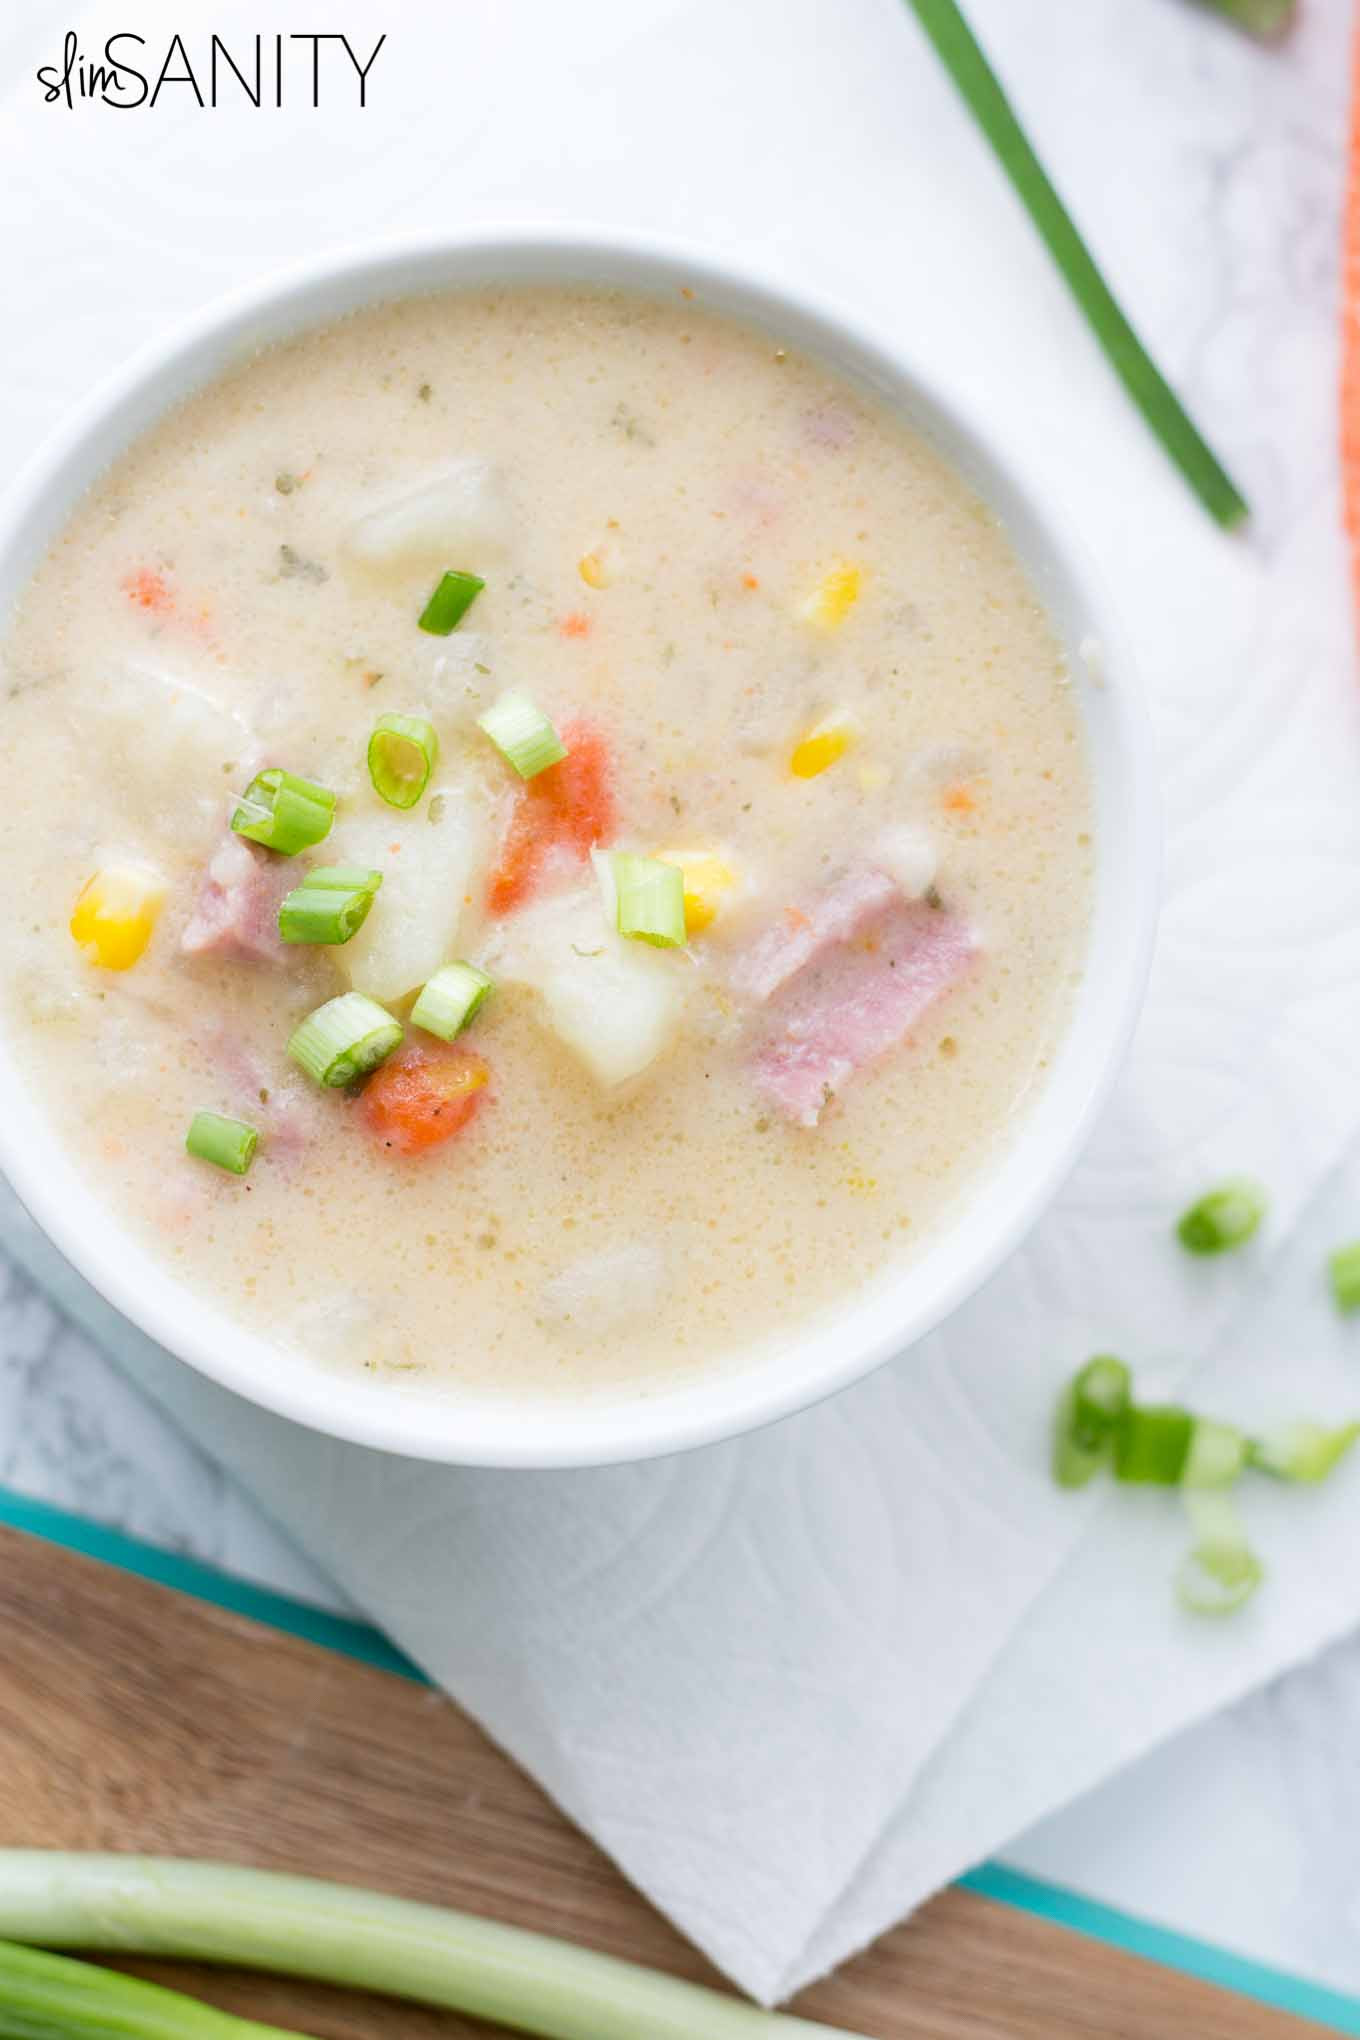 Healthy Potato Soup
 Healthy Soup Recipes Slim Sanity